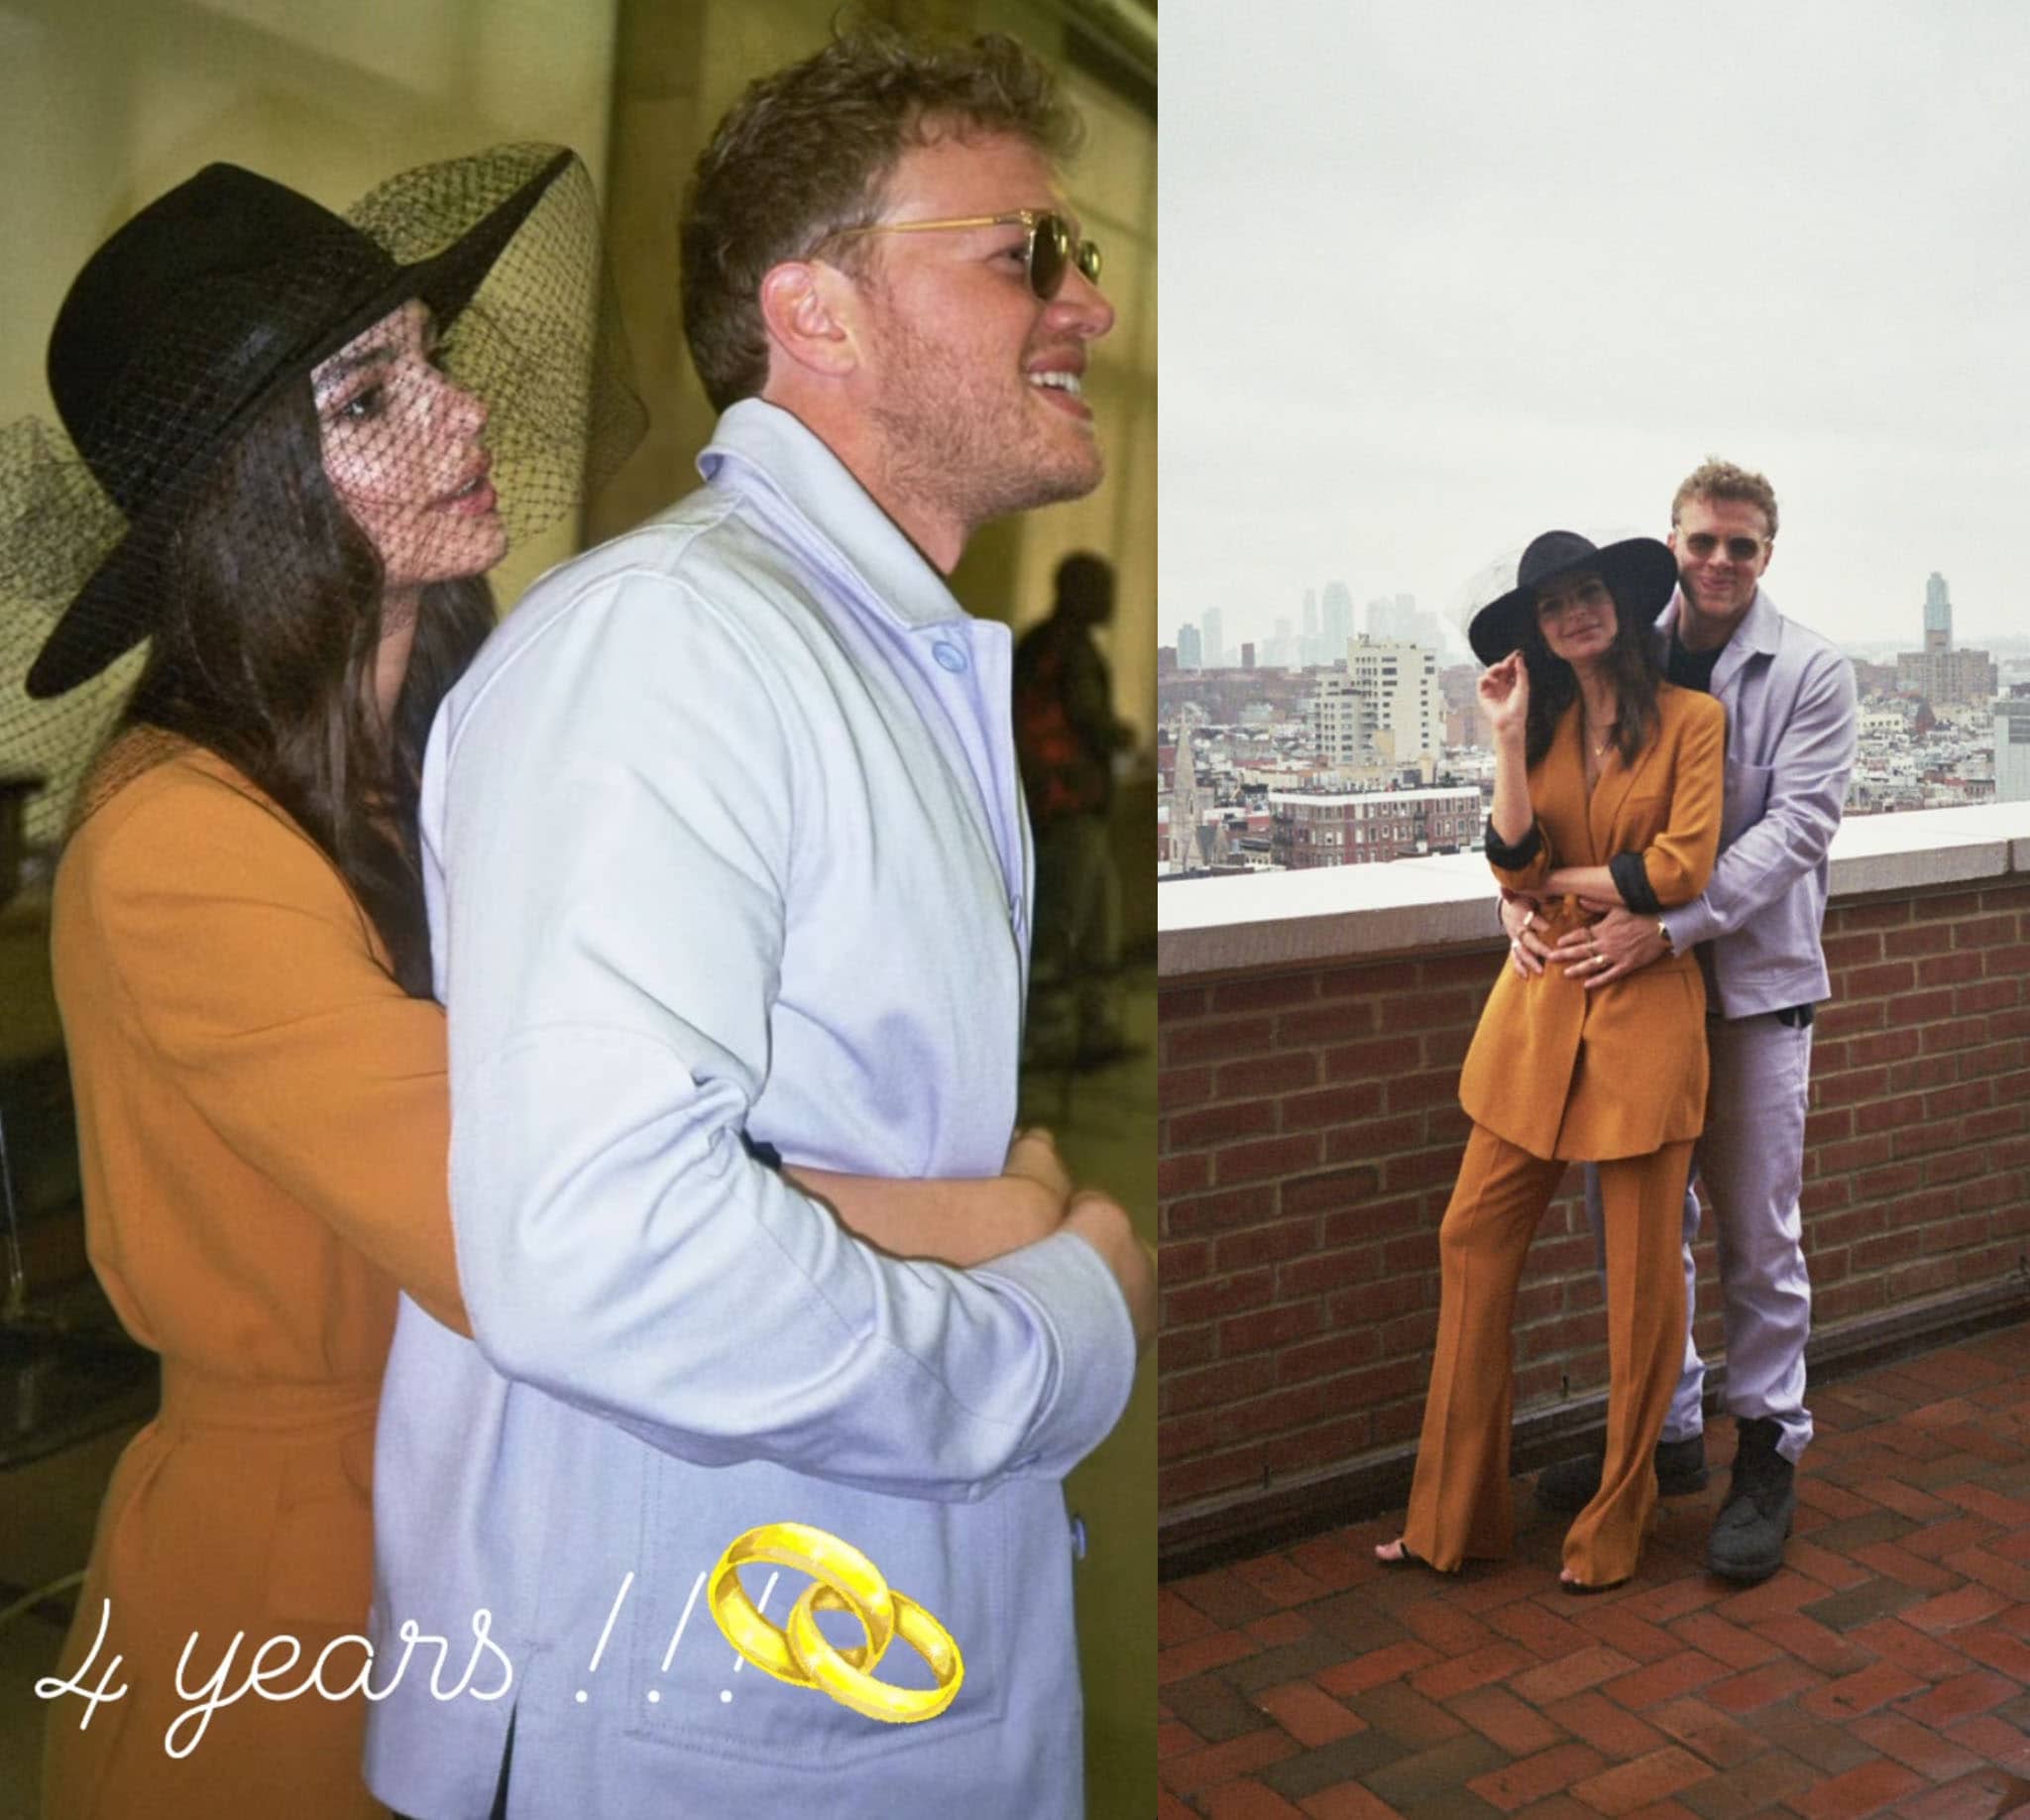 Emily Ratajkowski and husband Sebastian Bear-McClard celebrate fourth wedding anniversary on February 23, 2022